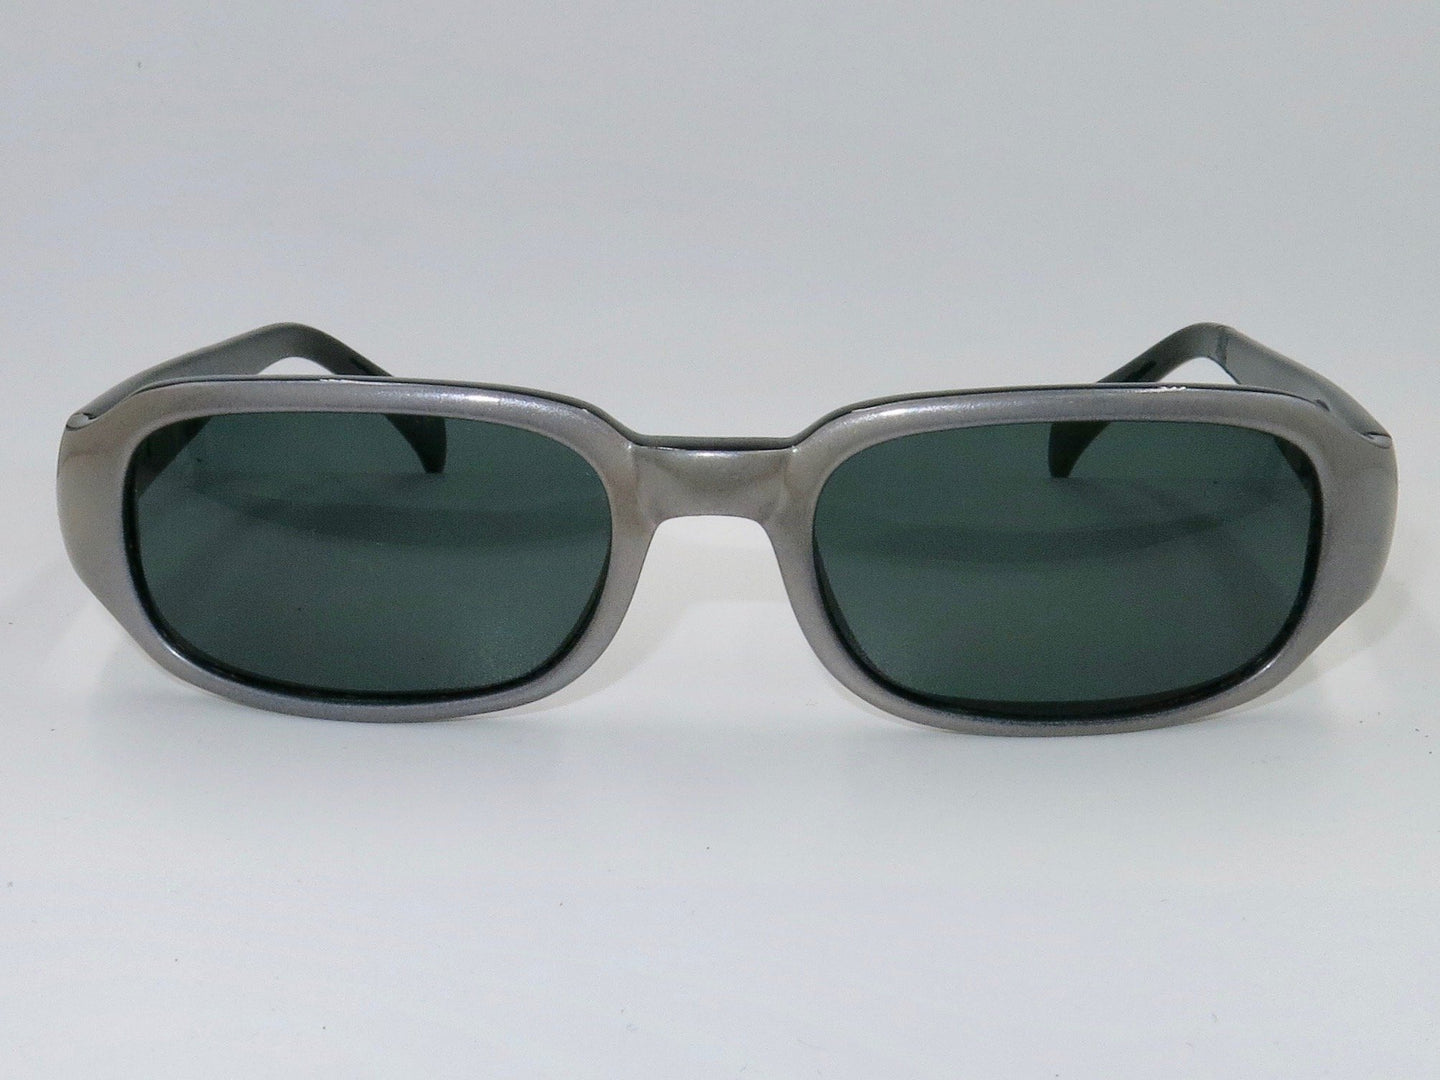 Harley Davidson Sunglasses - HDS 104 Grey | Sunglasses by Harley Davidson | Friedman & Sons